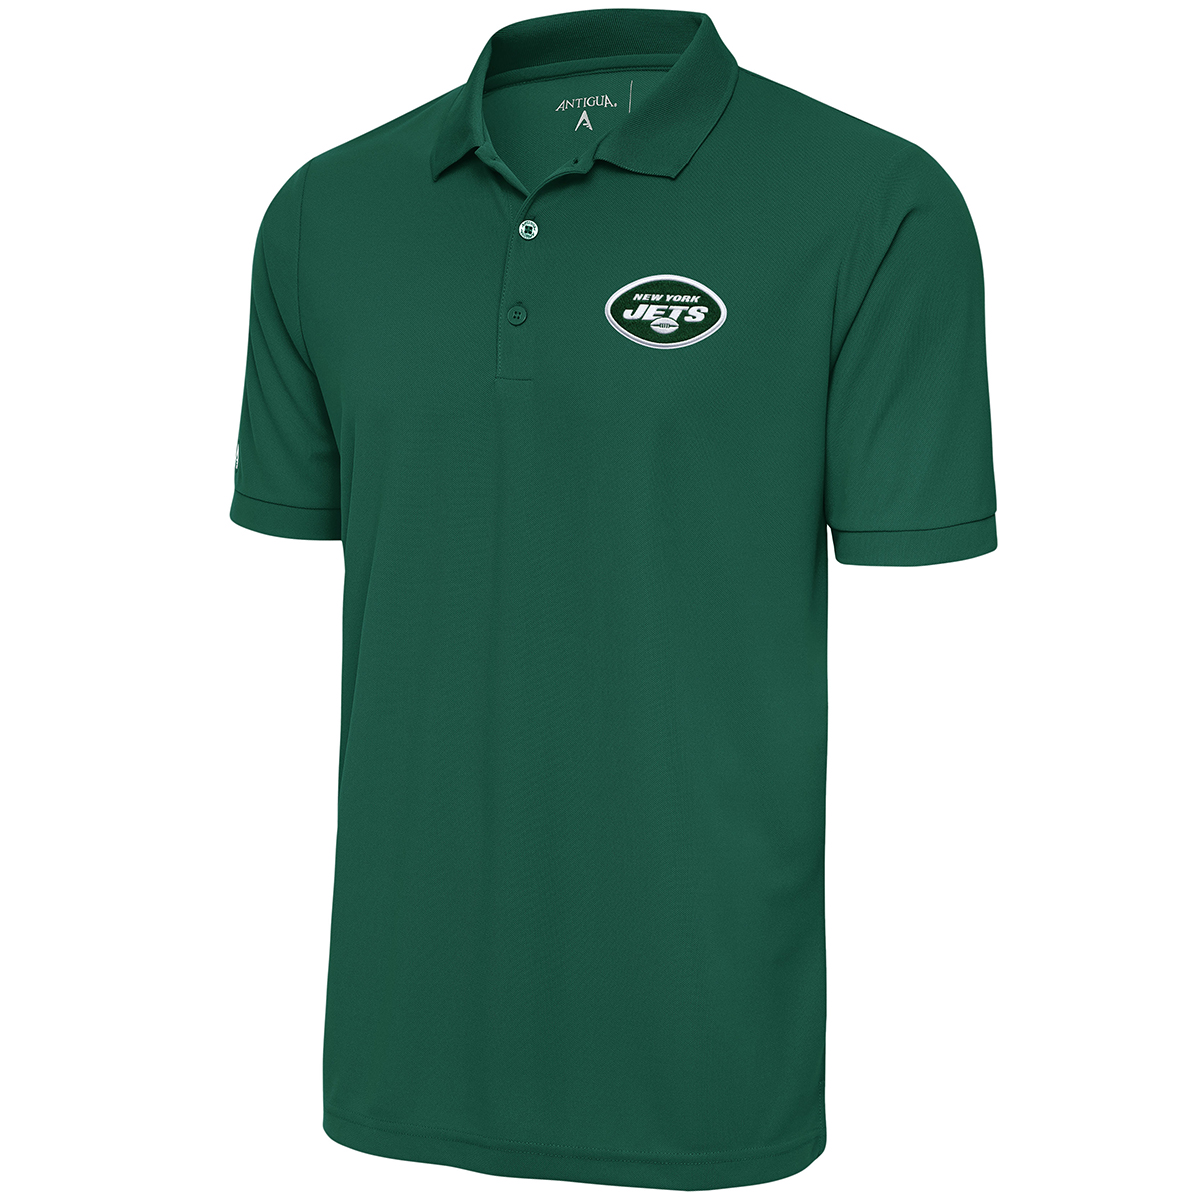 New York Jets Men's Antigua Legacy Short-Sleeve Pique Polo, Green